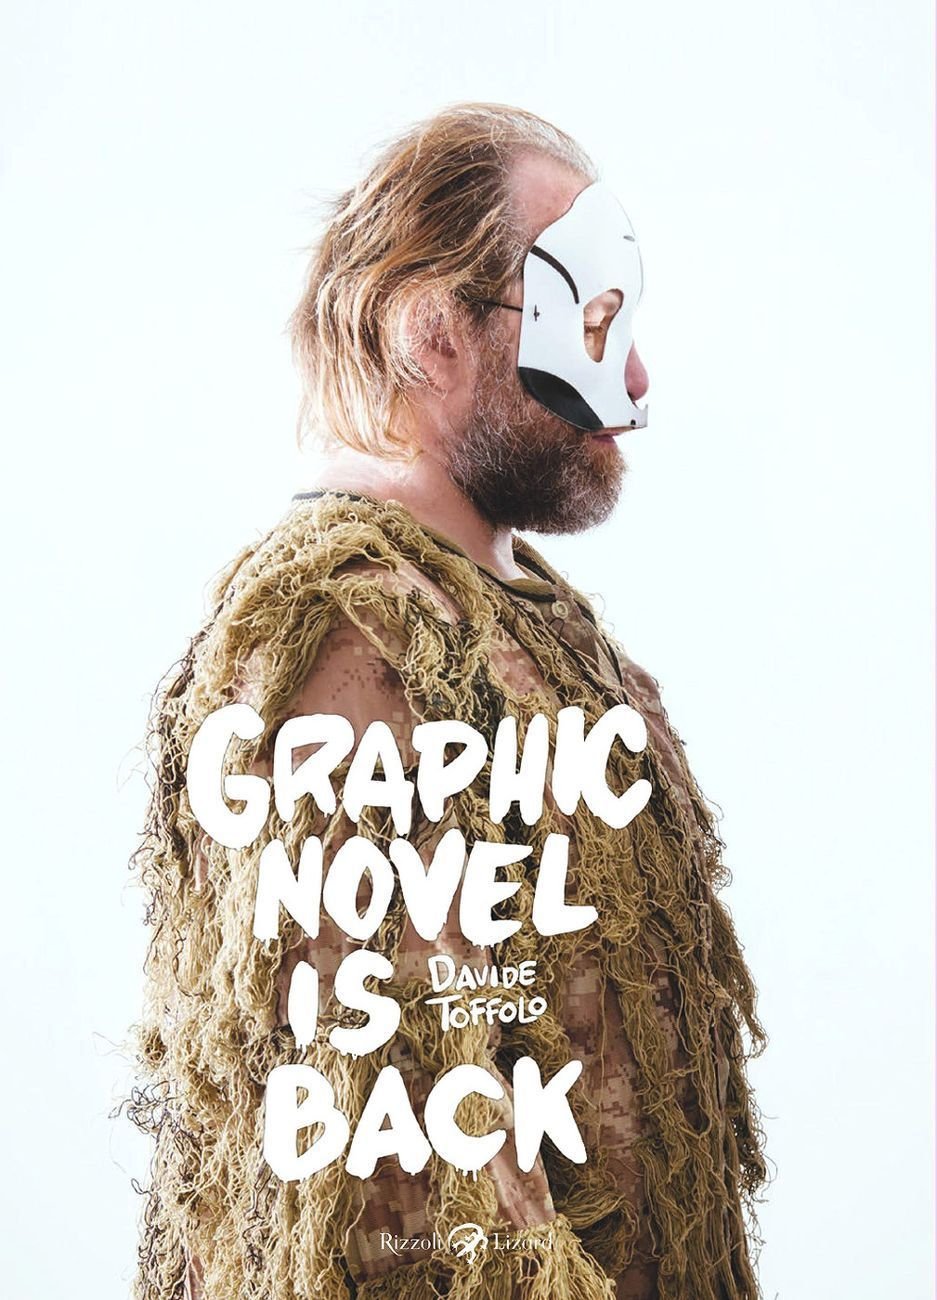 Davide Toffolo - Graphic novel is back (Rizzoli Lizard, Milano 2019)